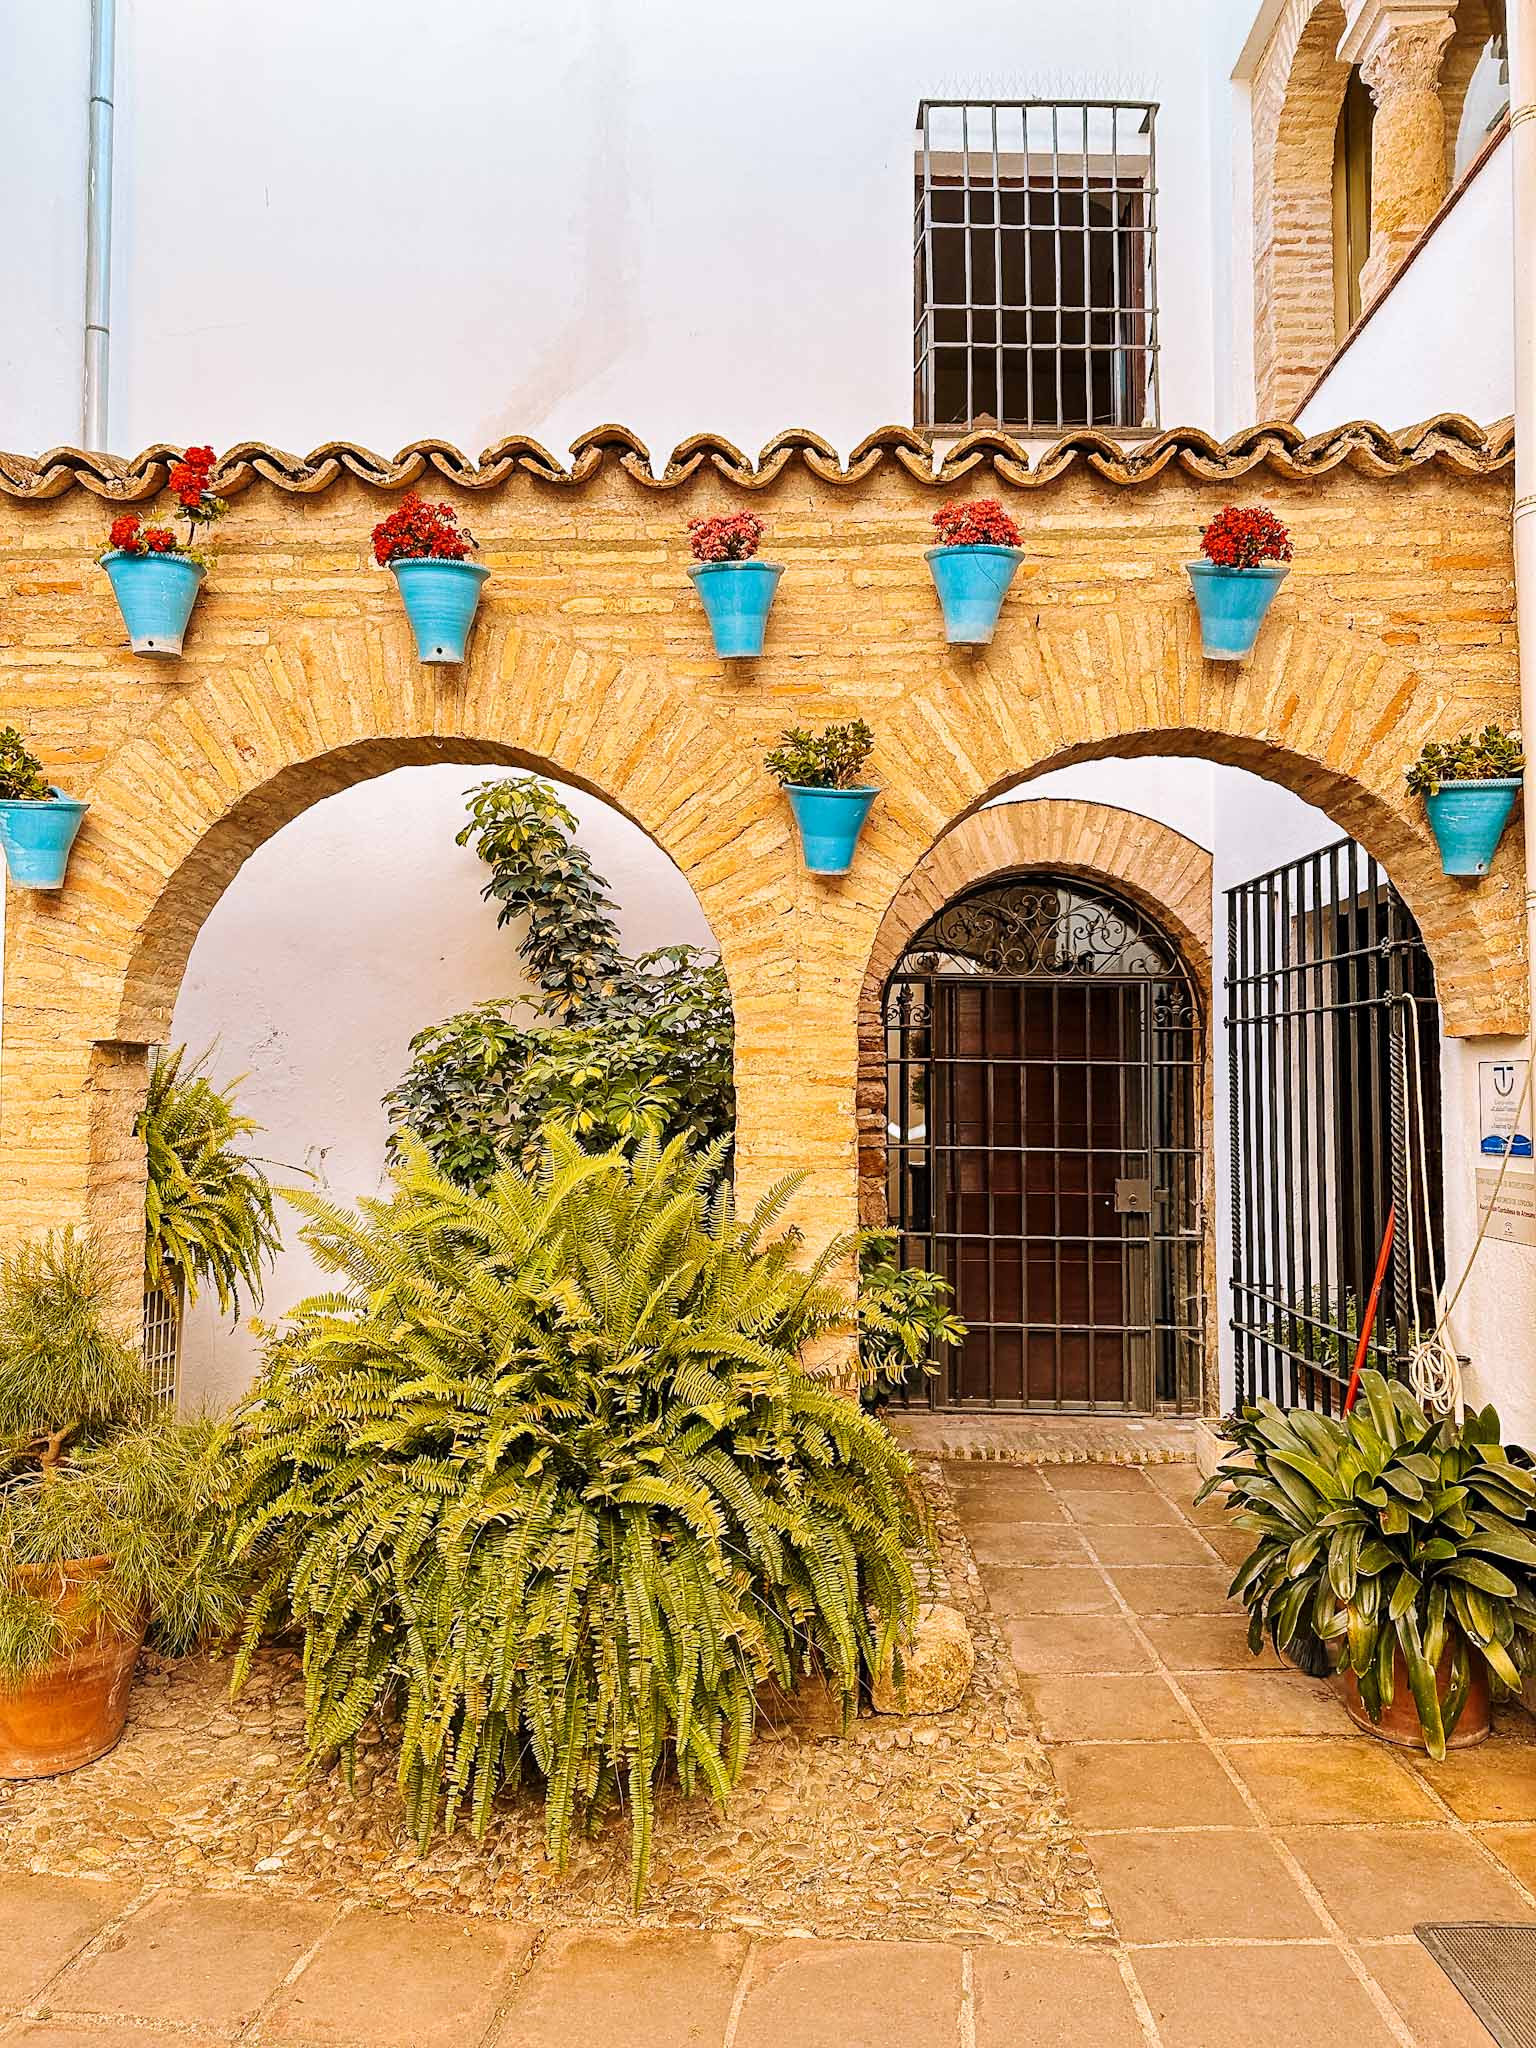 Córdoba, Spain - best things to do and the best Instagram spots in Córdoba